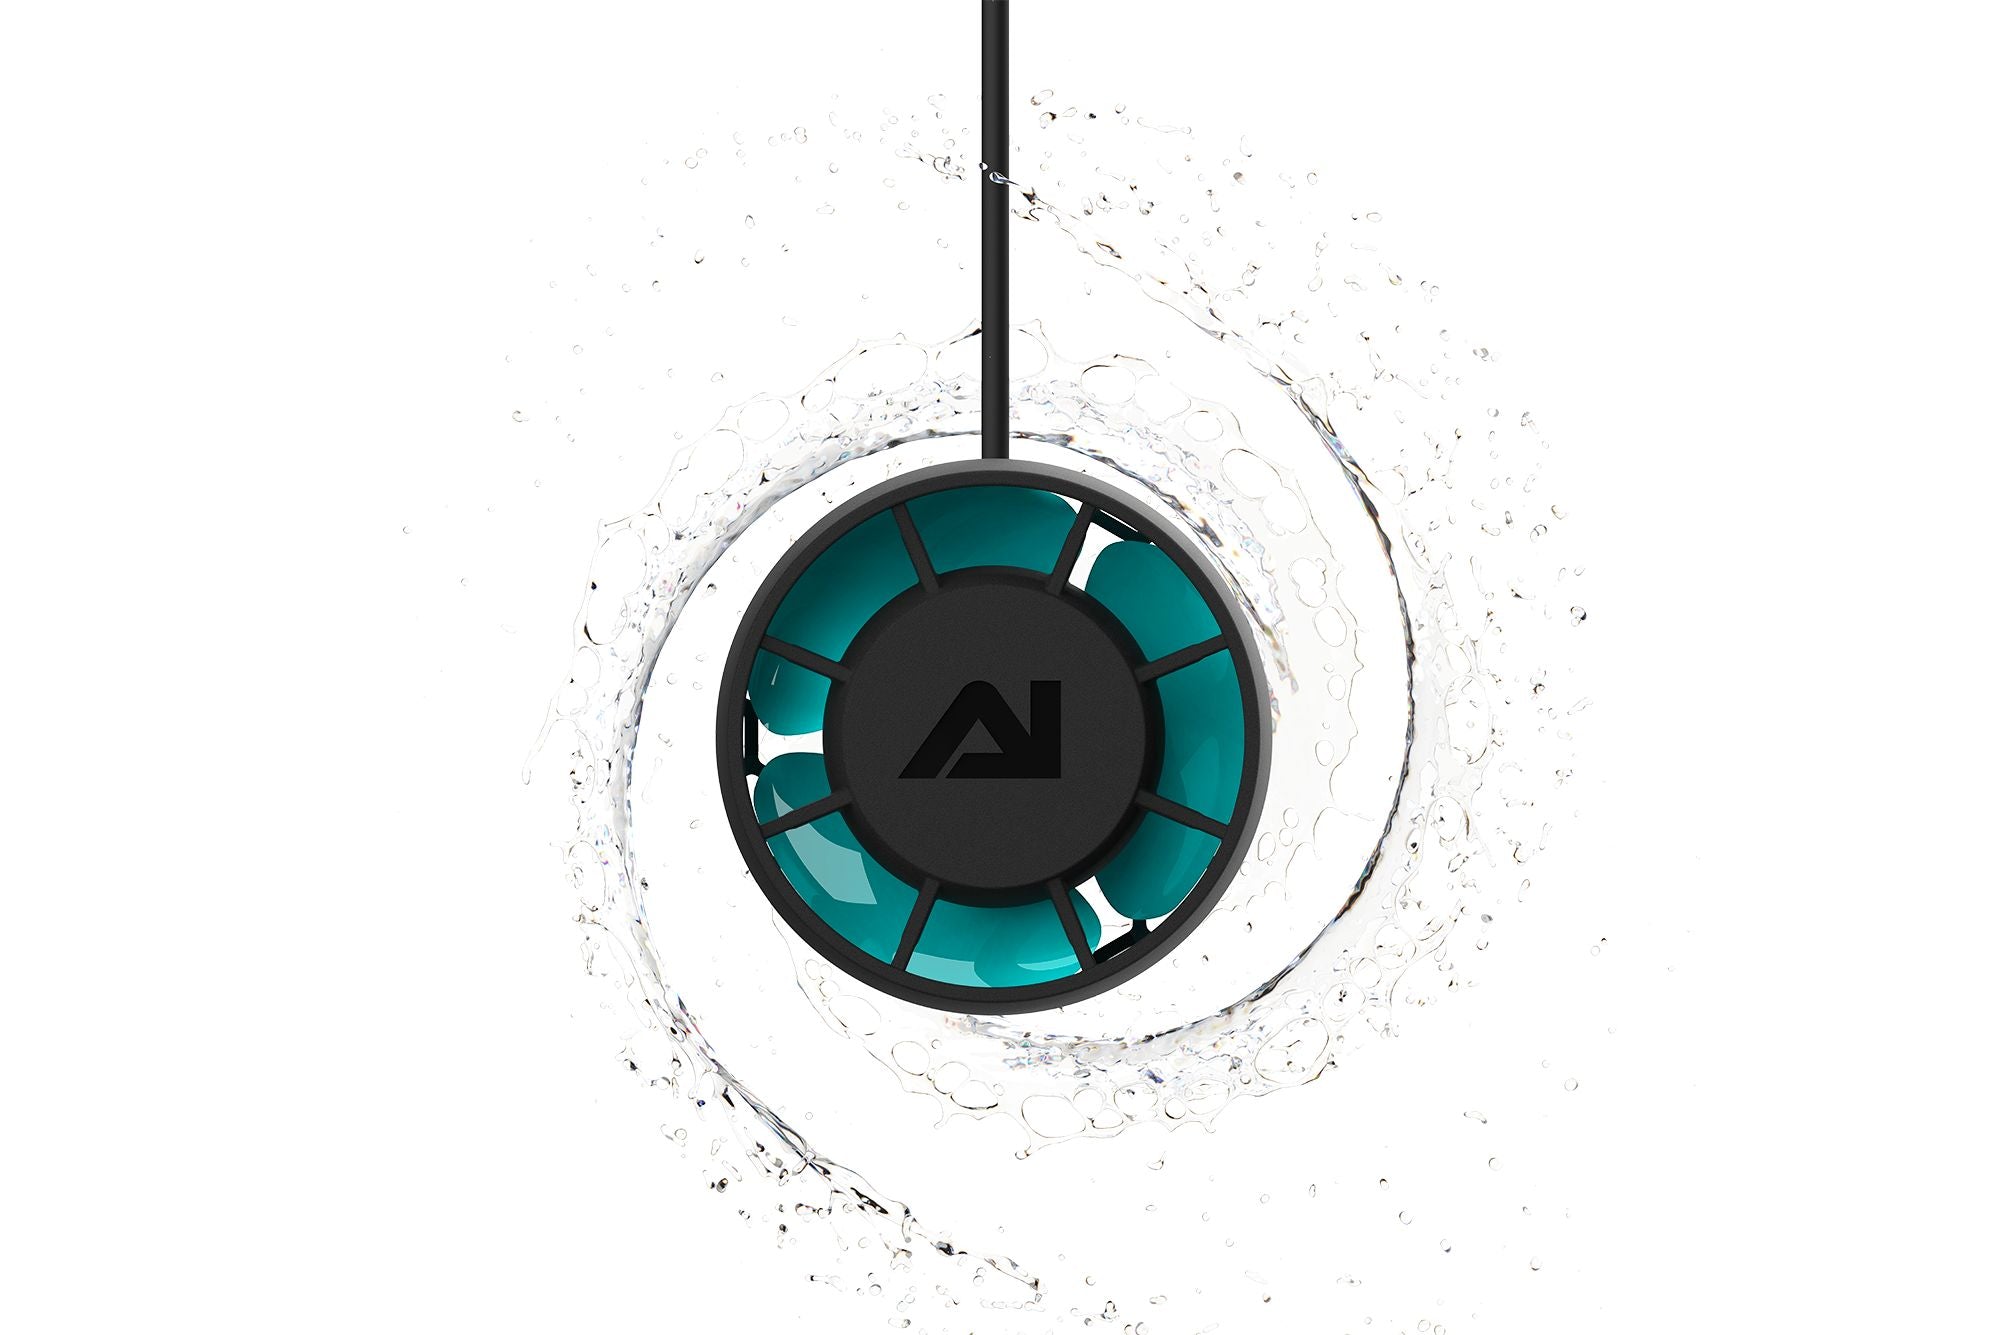 Detail photo for Aqua Illumination AI Nero 5 Powerhead Submersible Pump Kit